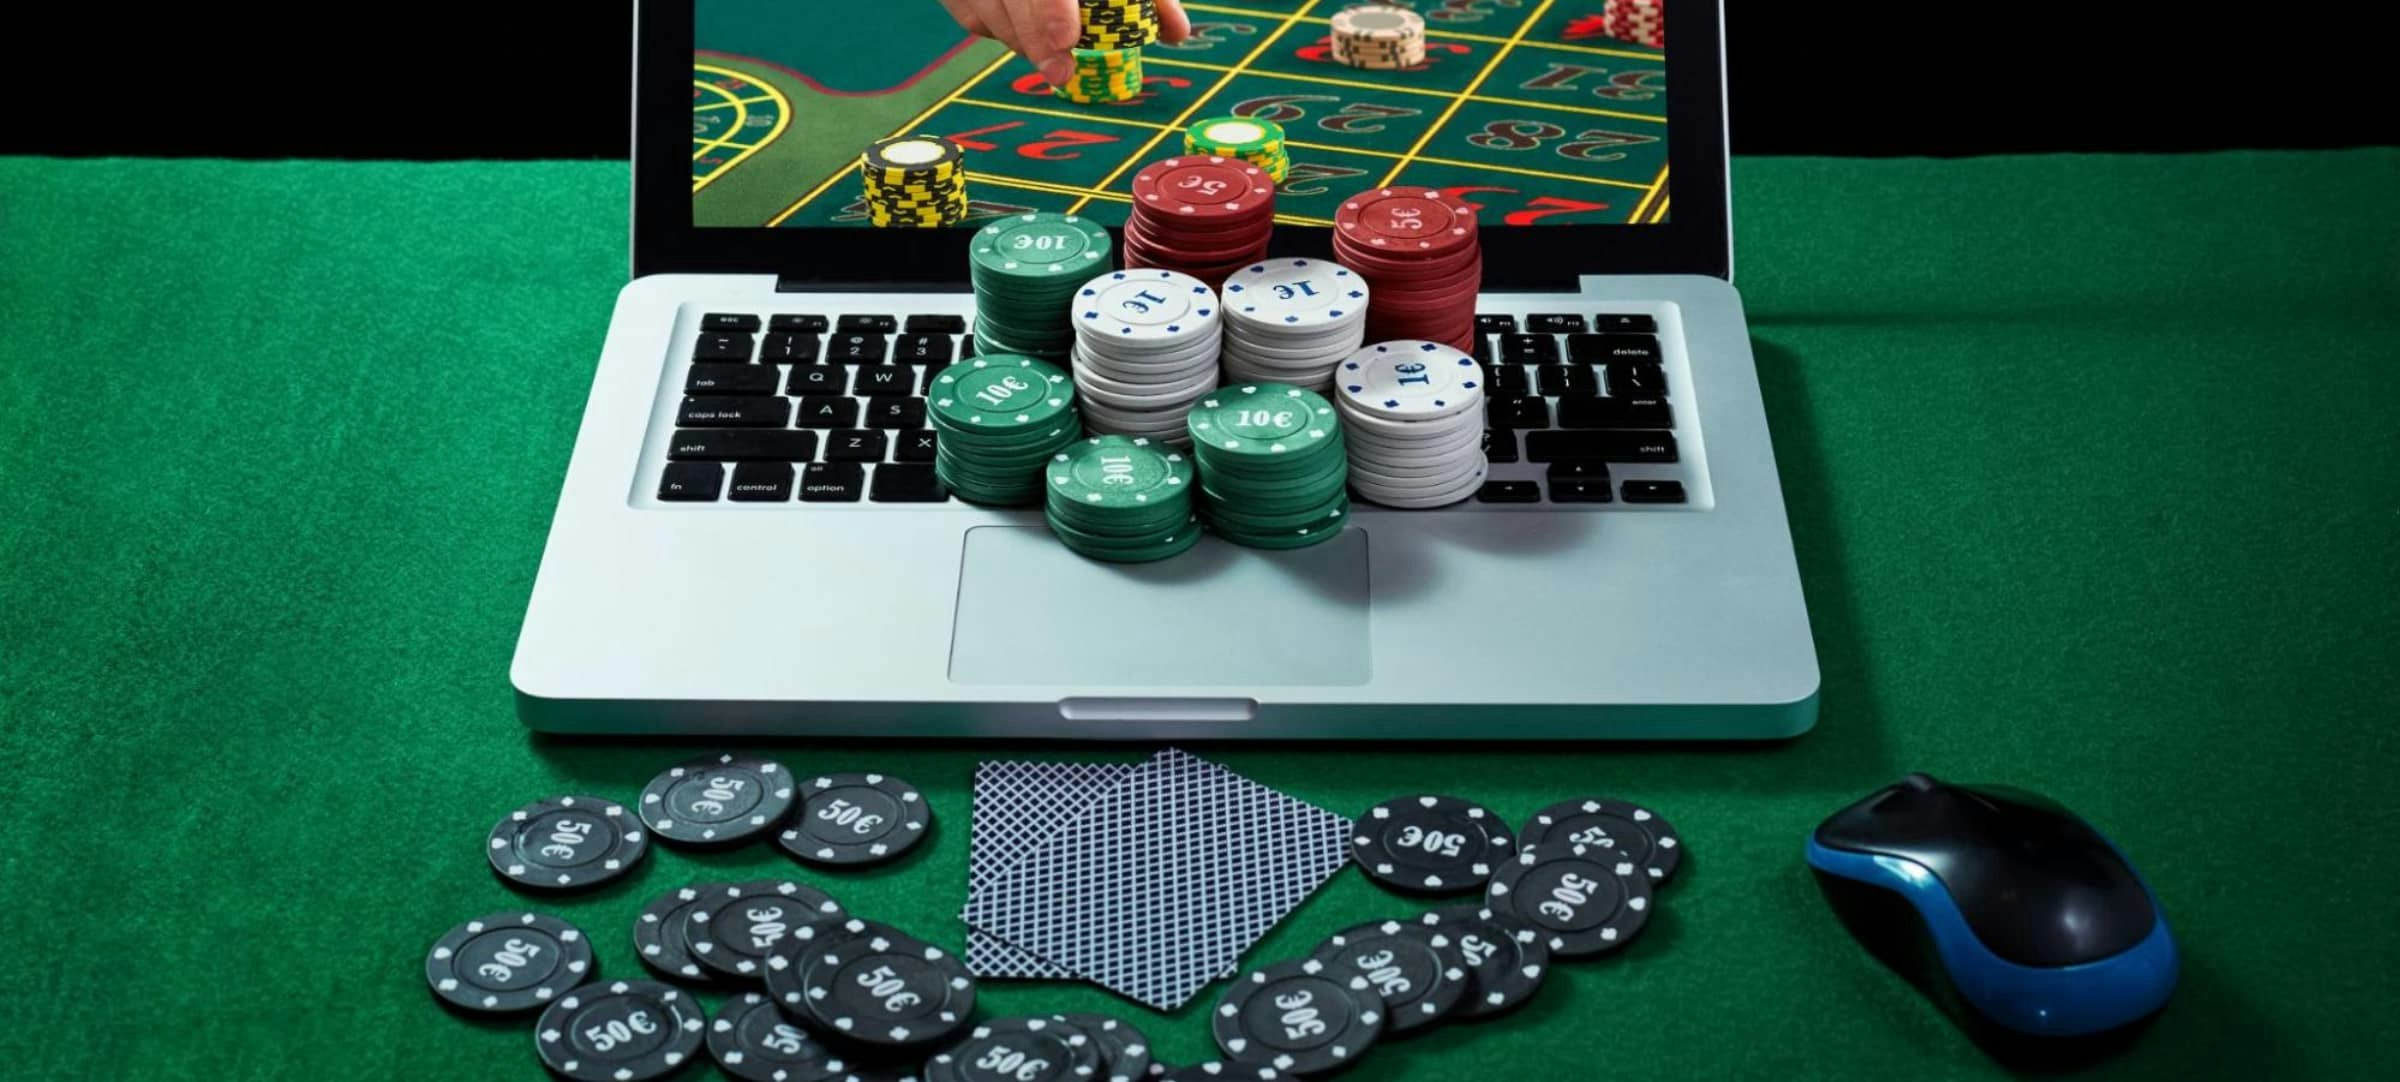 Advantages of a Bitcoin casino vs Traditional casinos